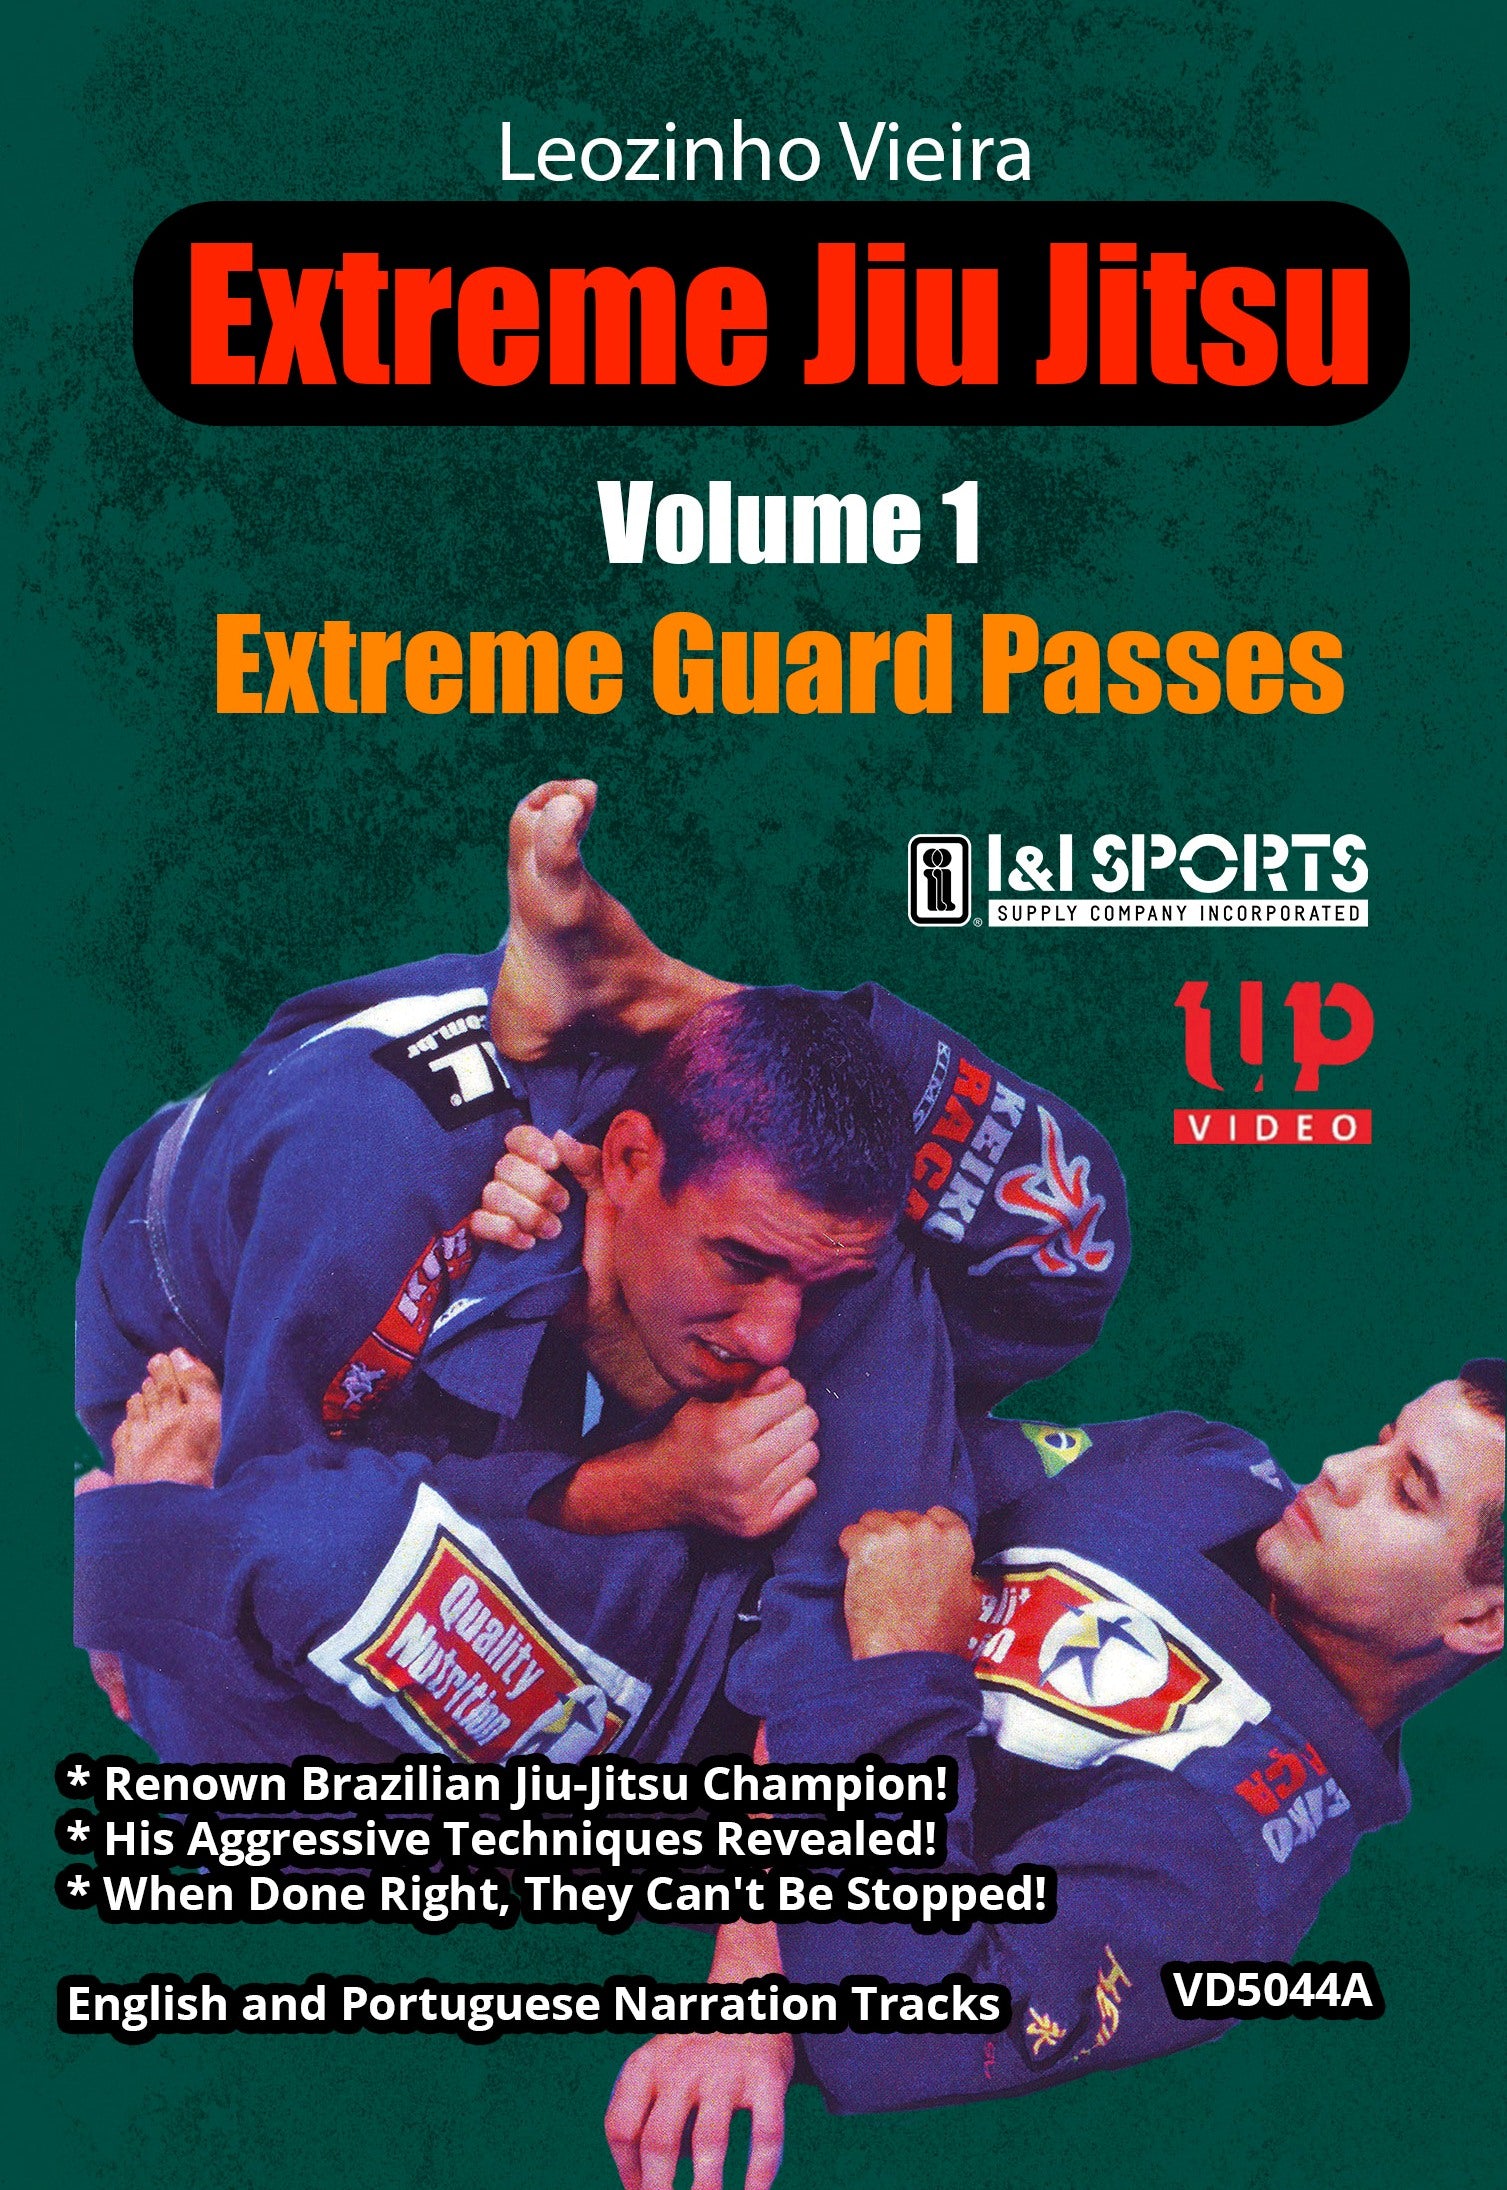 Extreme Jiu-Jitsu #1 Guard Passes DVD Leozinho Vieira mma nhb